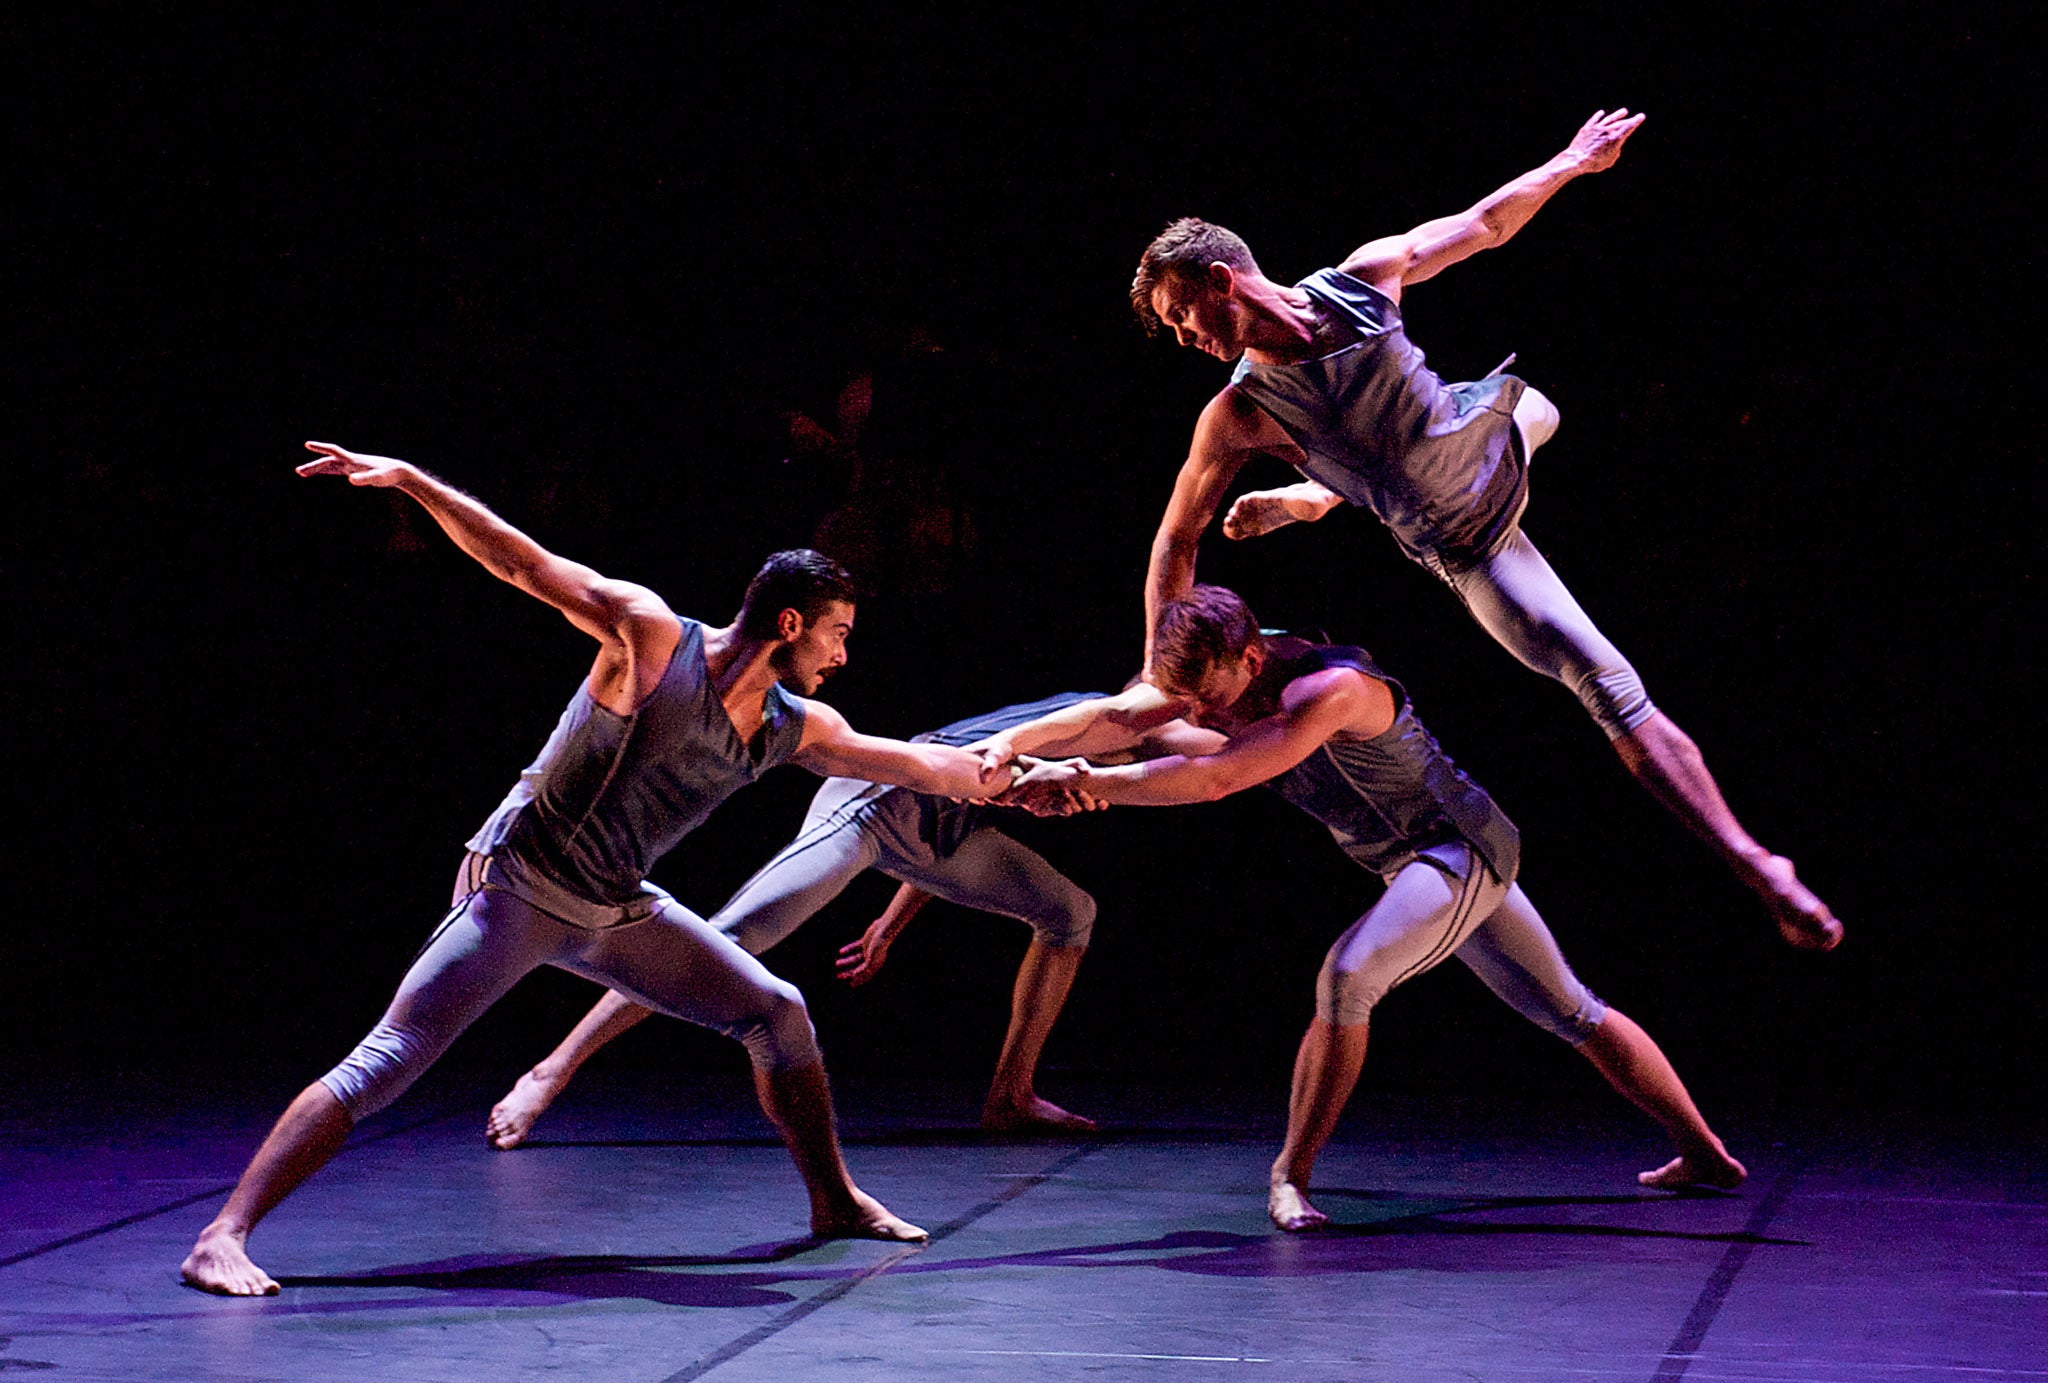 BalletBoyz the Talent in 'Mesmerics' by Christopher Wheeldon